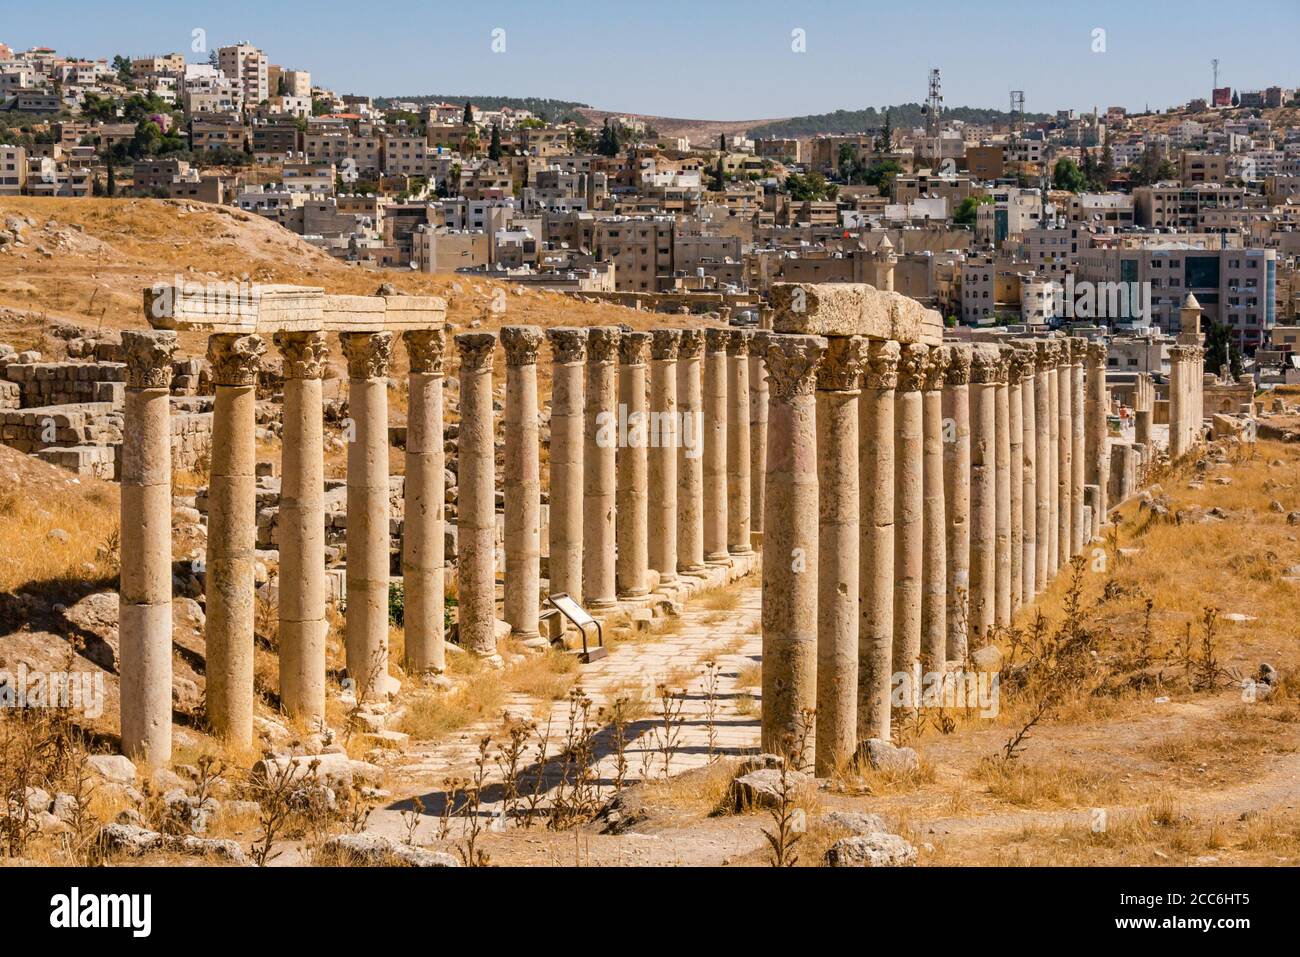 Ruined row of Corinthian columns lining paved Cardo, Roman city of Jerash, Jordan, Middle east Stock Photo